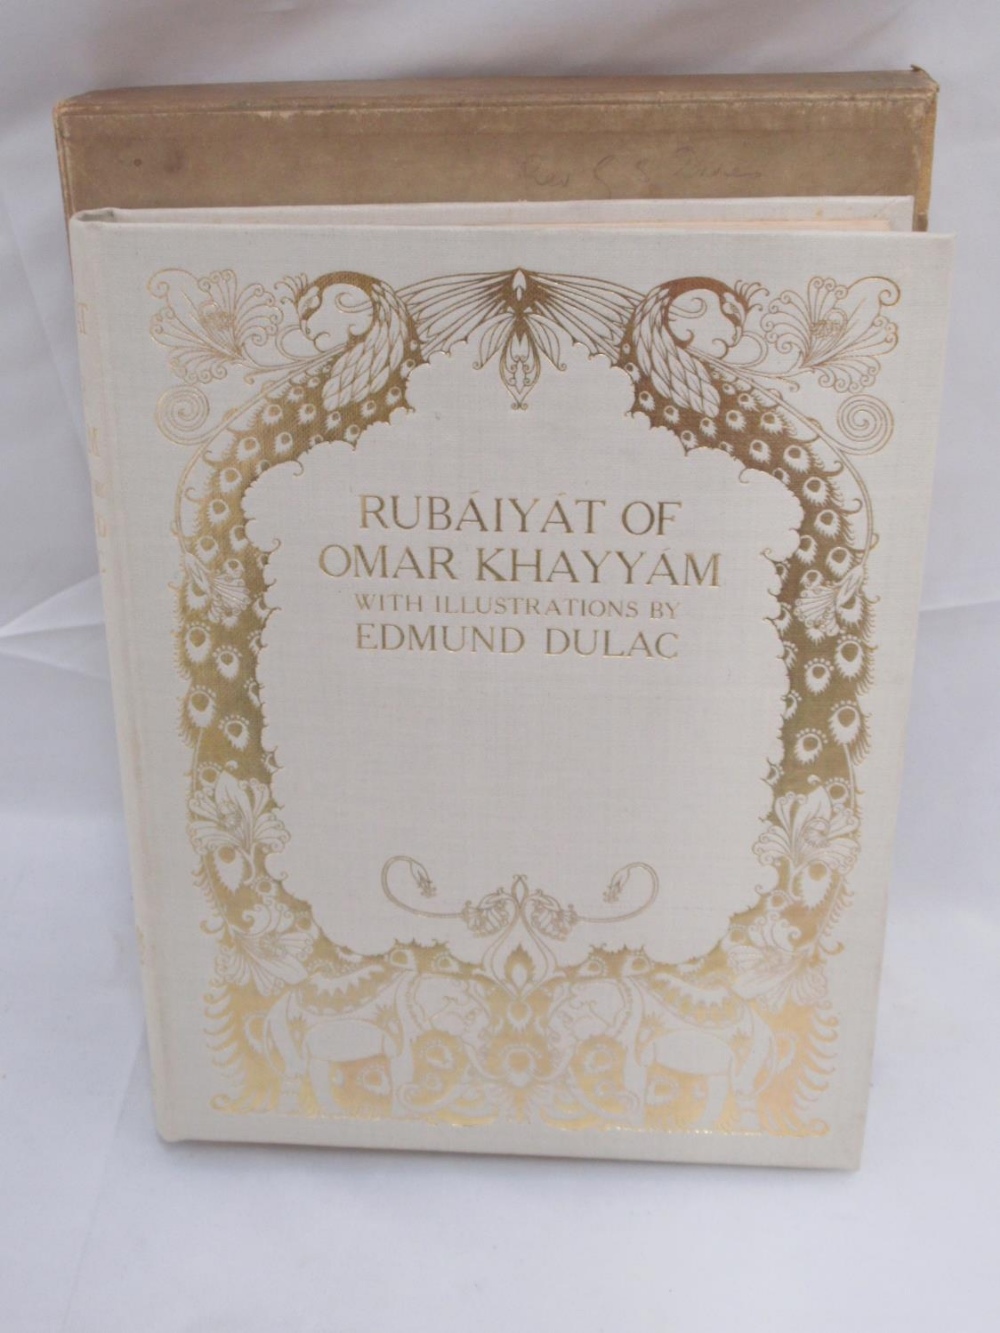 Rubaiyat of Omar Khayyam, Rendered into English Verse by Edward Fitzgerald, with Illustrations by - Image 2 of 4